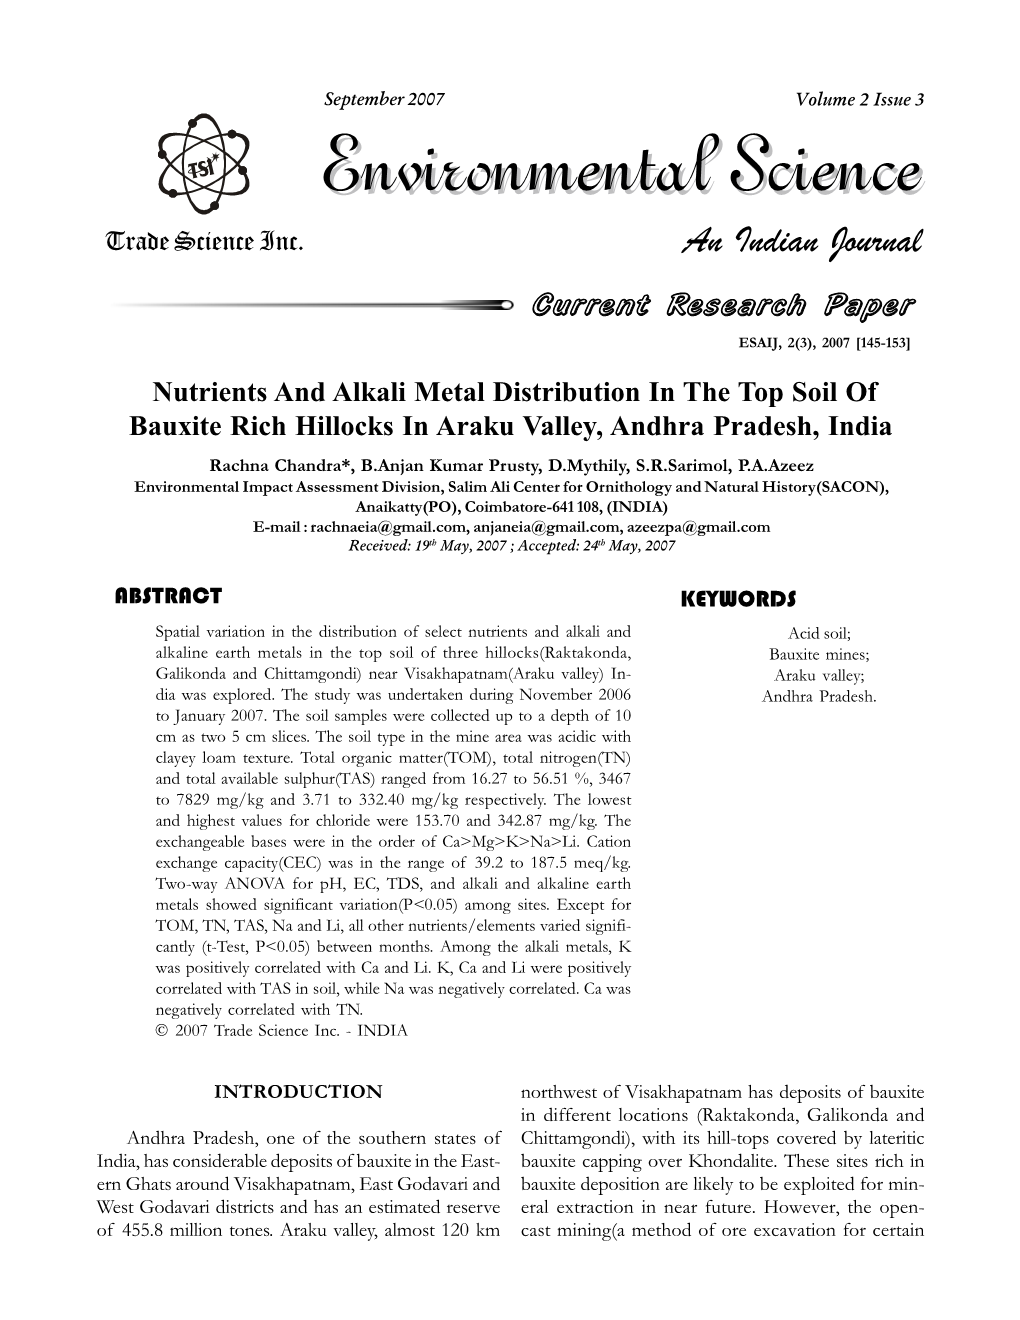 Nutrients and Alkali Metal Distribution in the Top Soil of Bauxite Rich Hillocks in Araku Valley